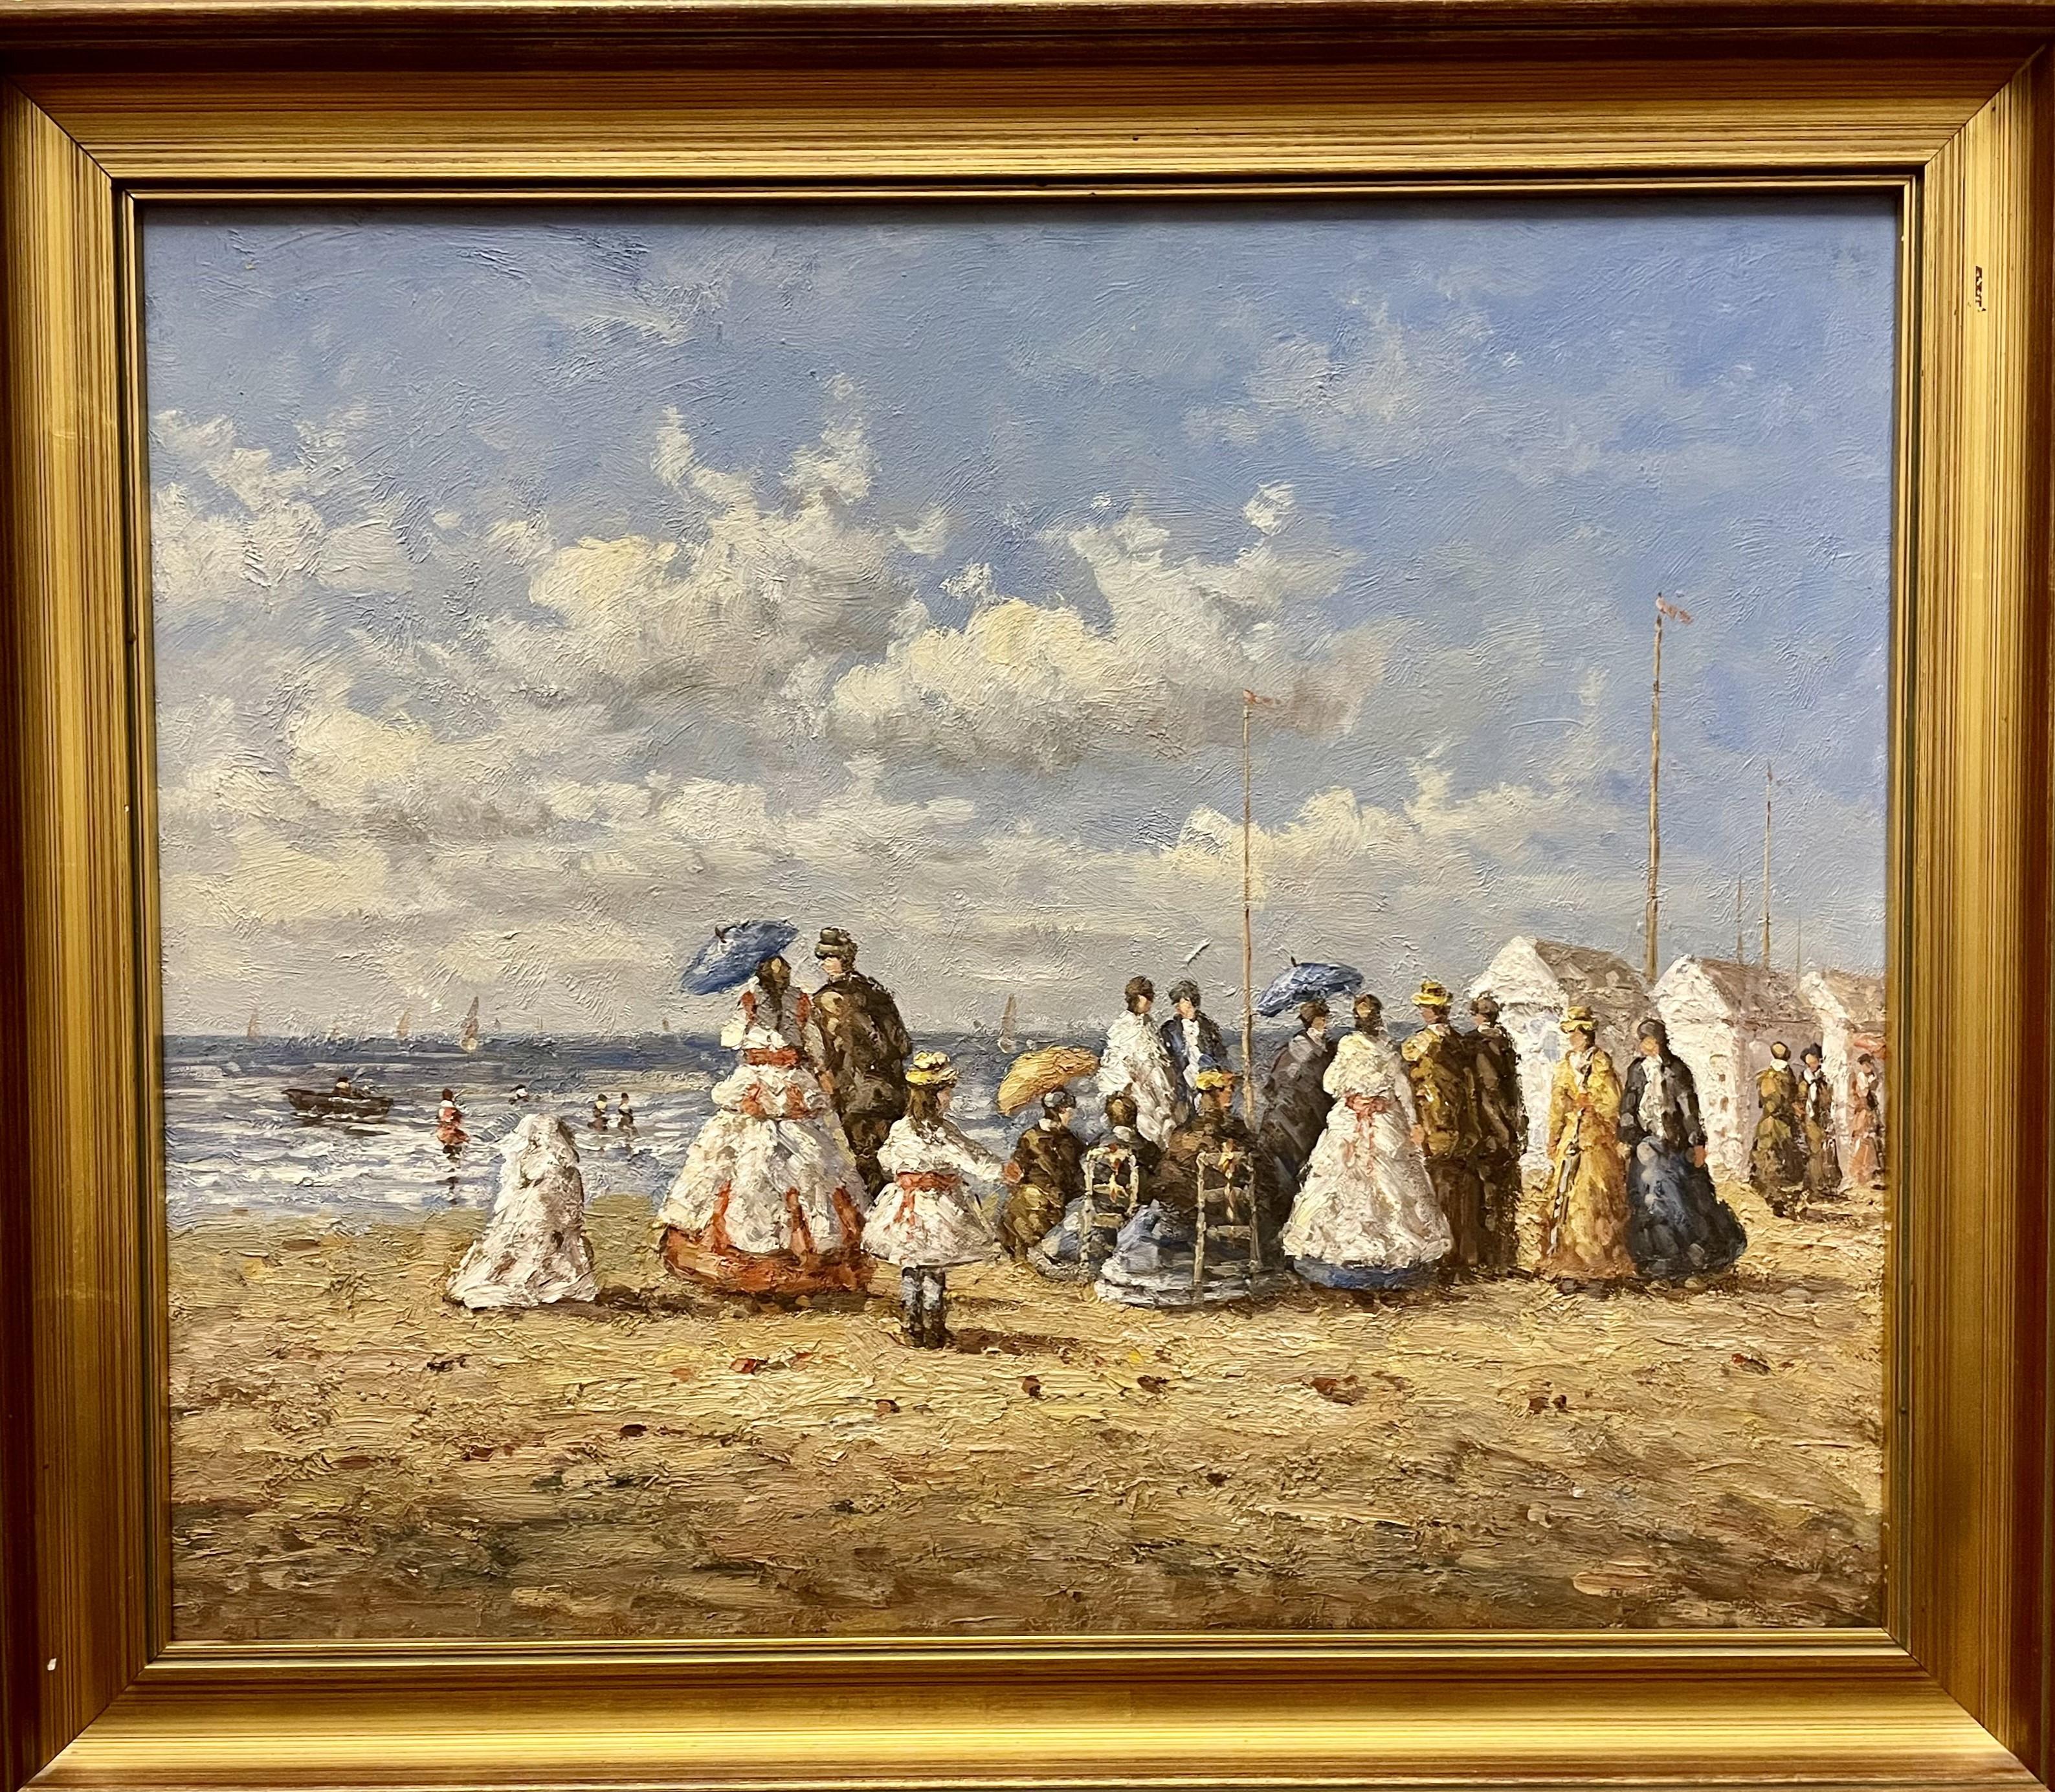 Edwardian Beach Scene, British 20th century oil on canvas